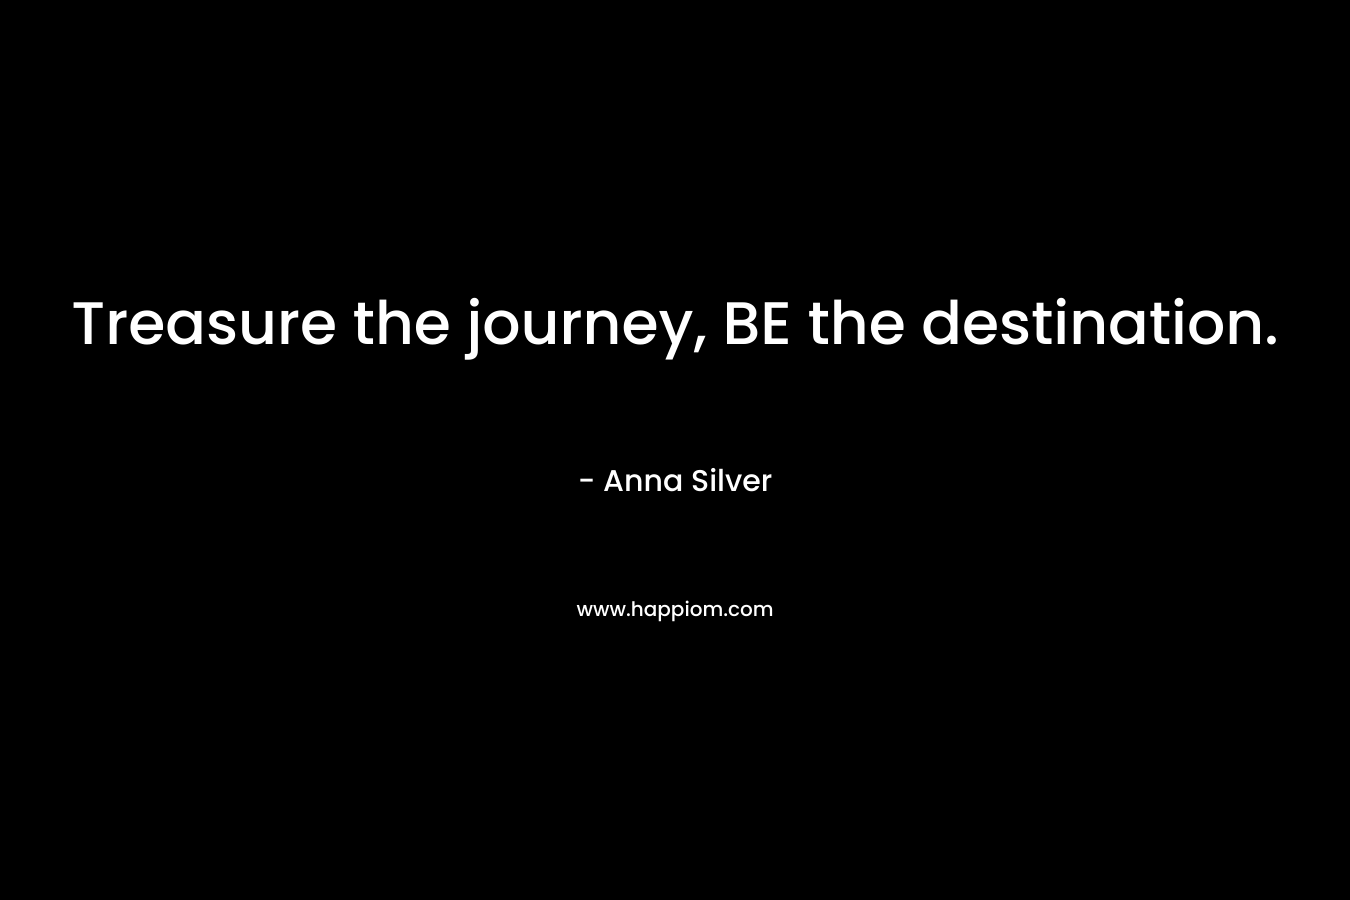 Treasure the journey, BE the destination.